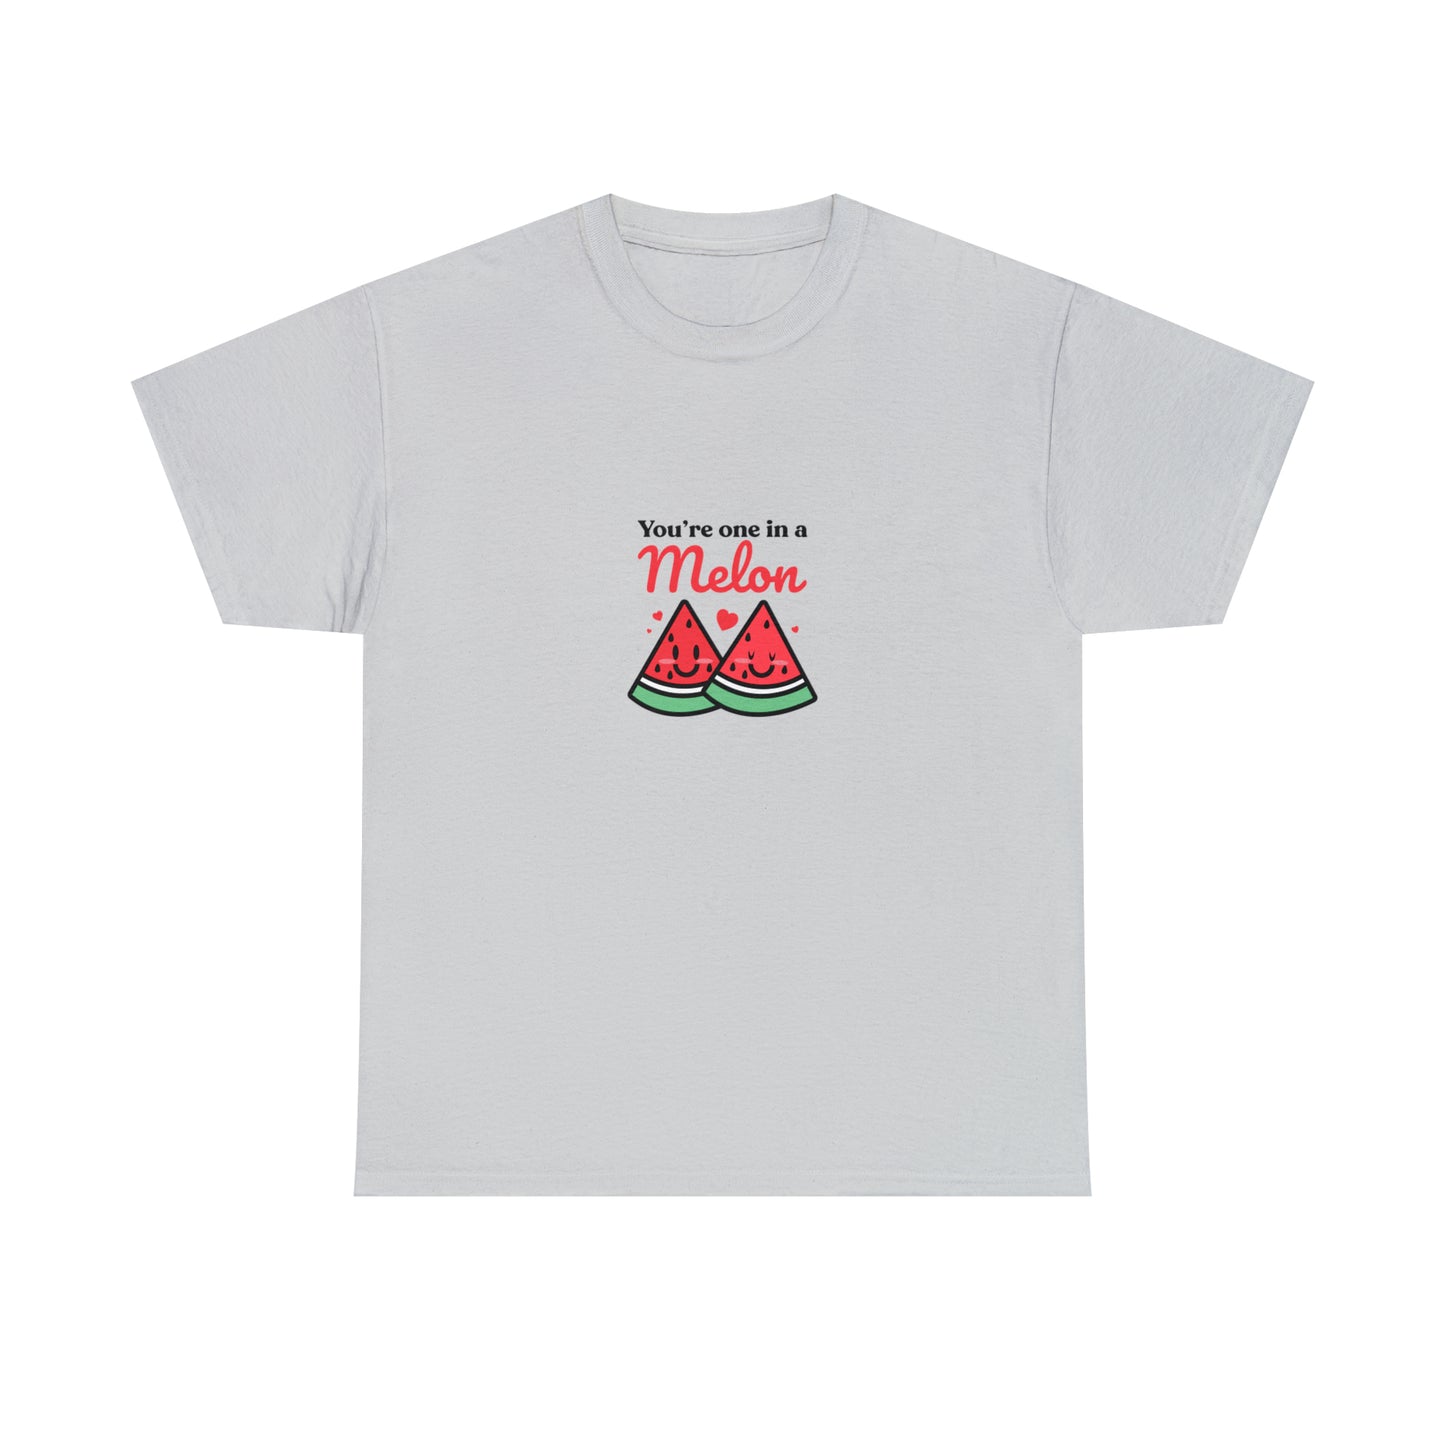 Custom Parody T-shirt, You're one in a melon design